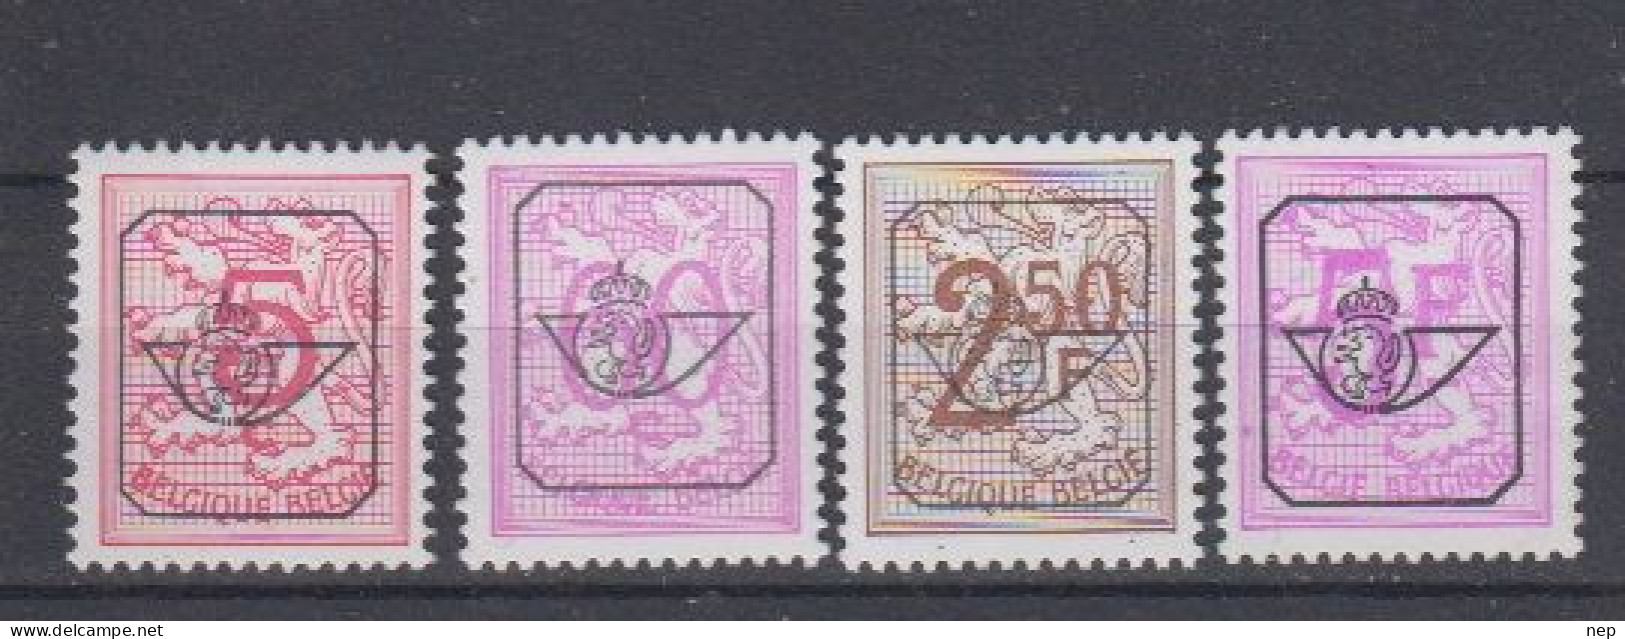 BELGIË - OBP - 1979/80 - PRE 799/98 P6 (60A Type G) - MNH** - Typo Precancels 1951-80 (Figure On Lion)